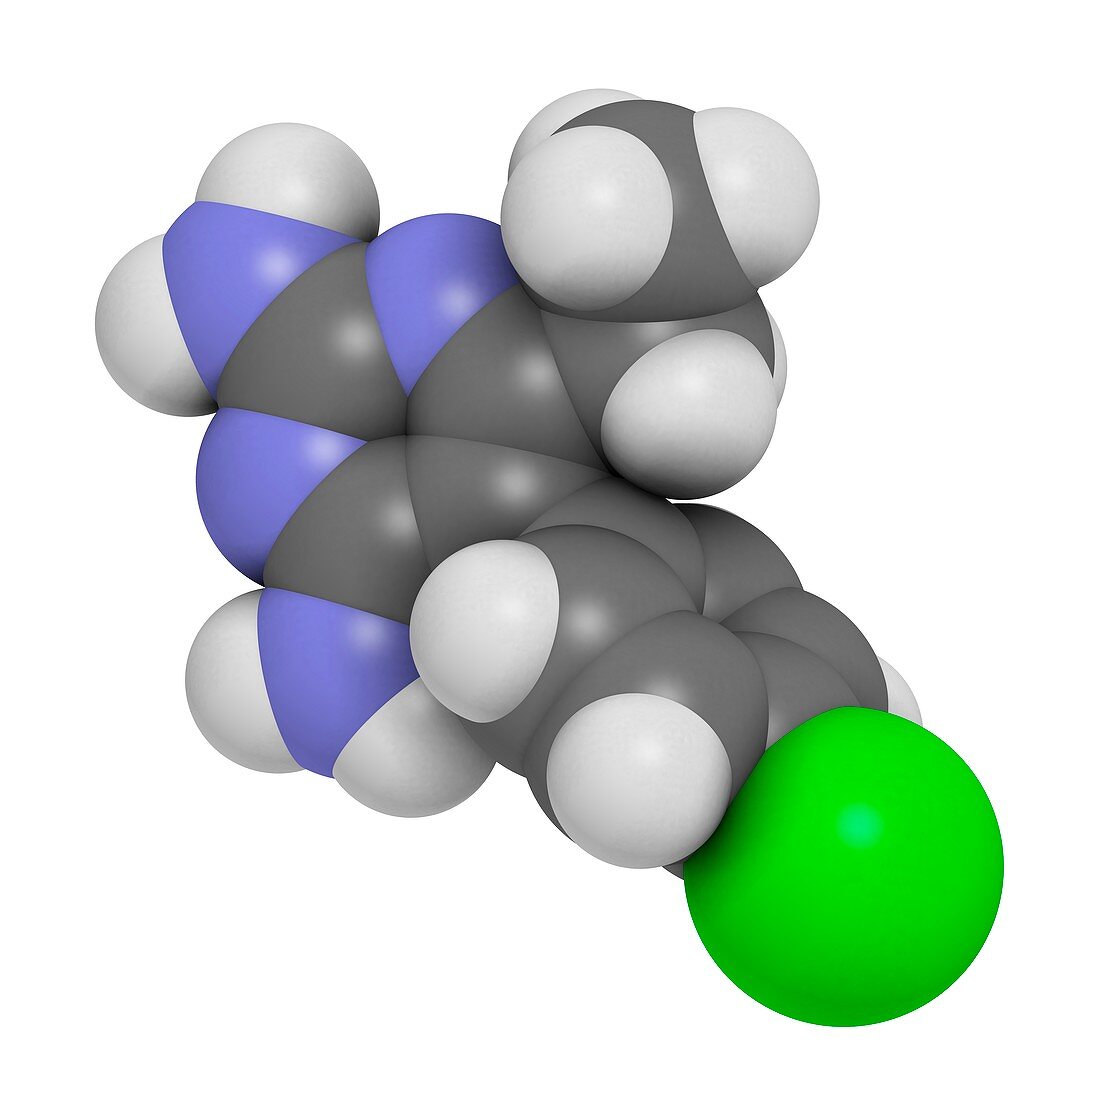 Pyrimethamine malaria drug molecule